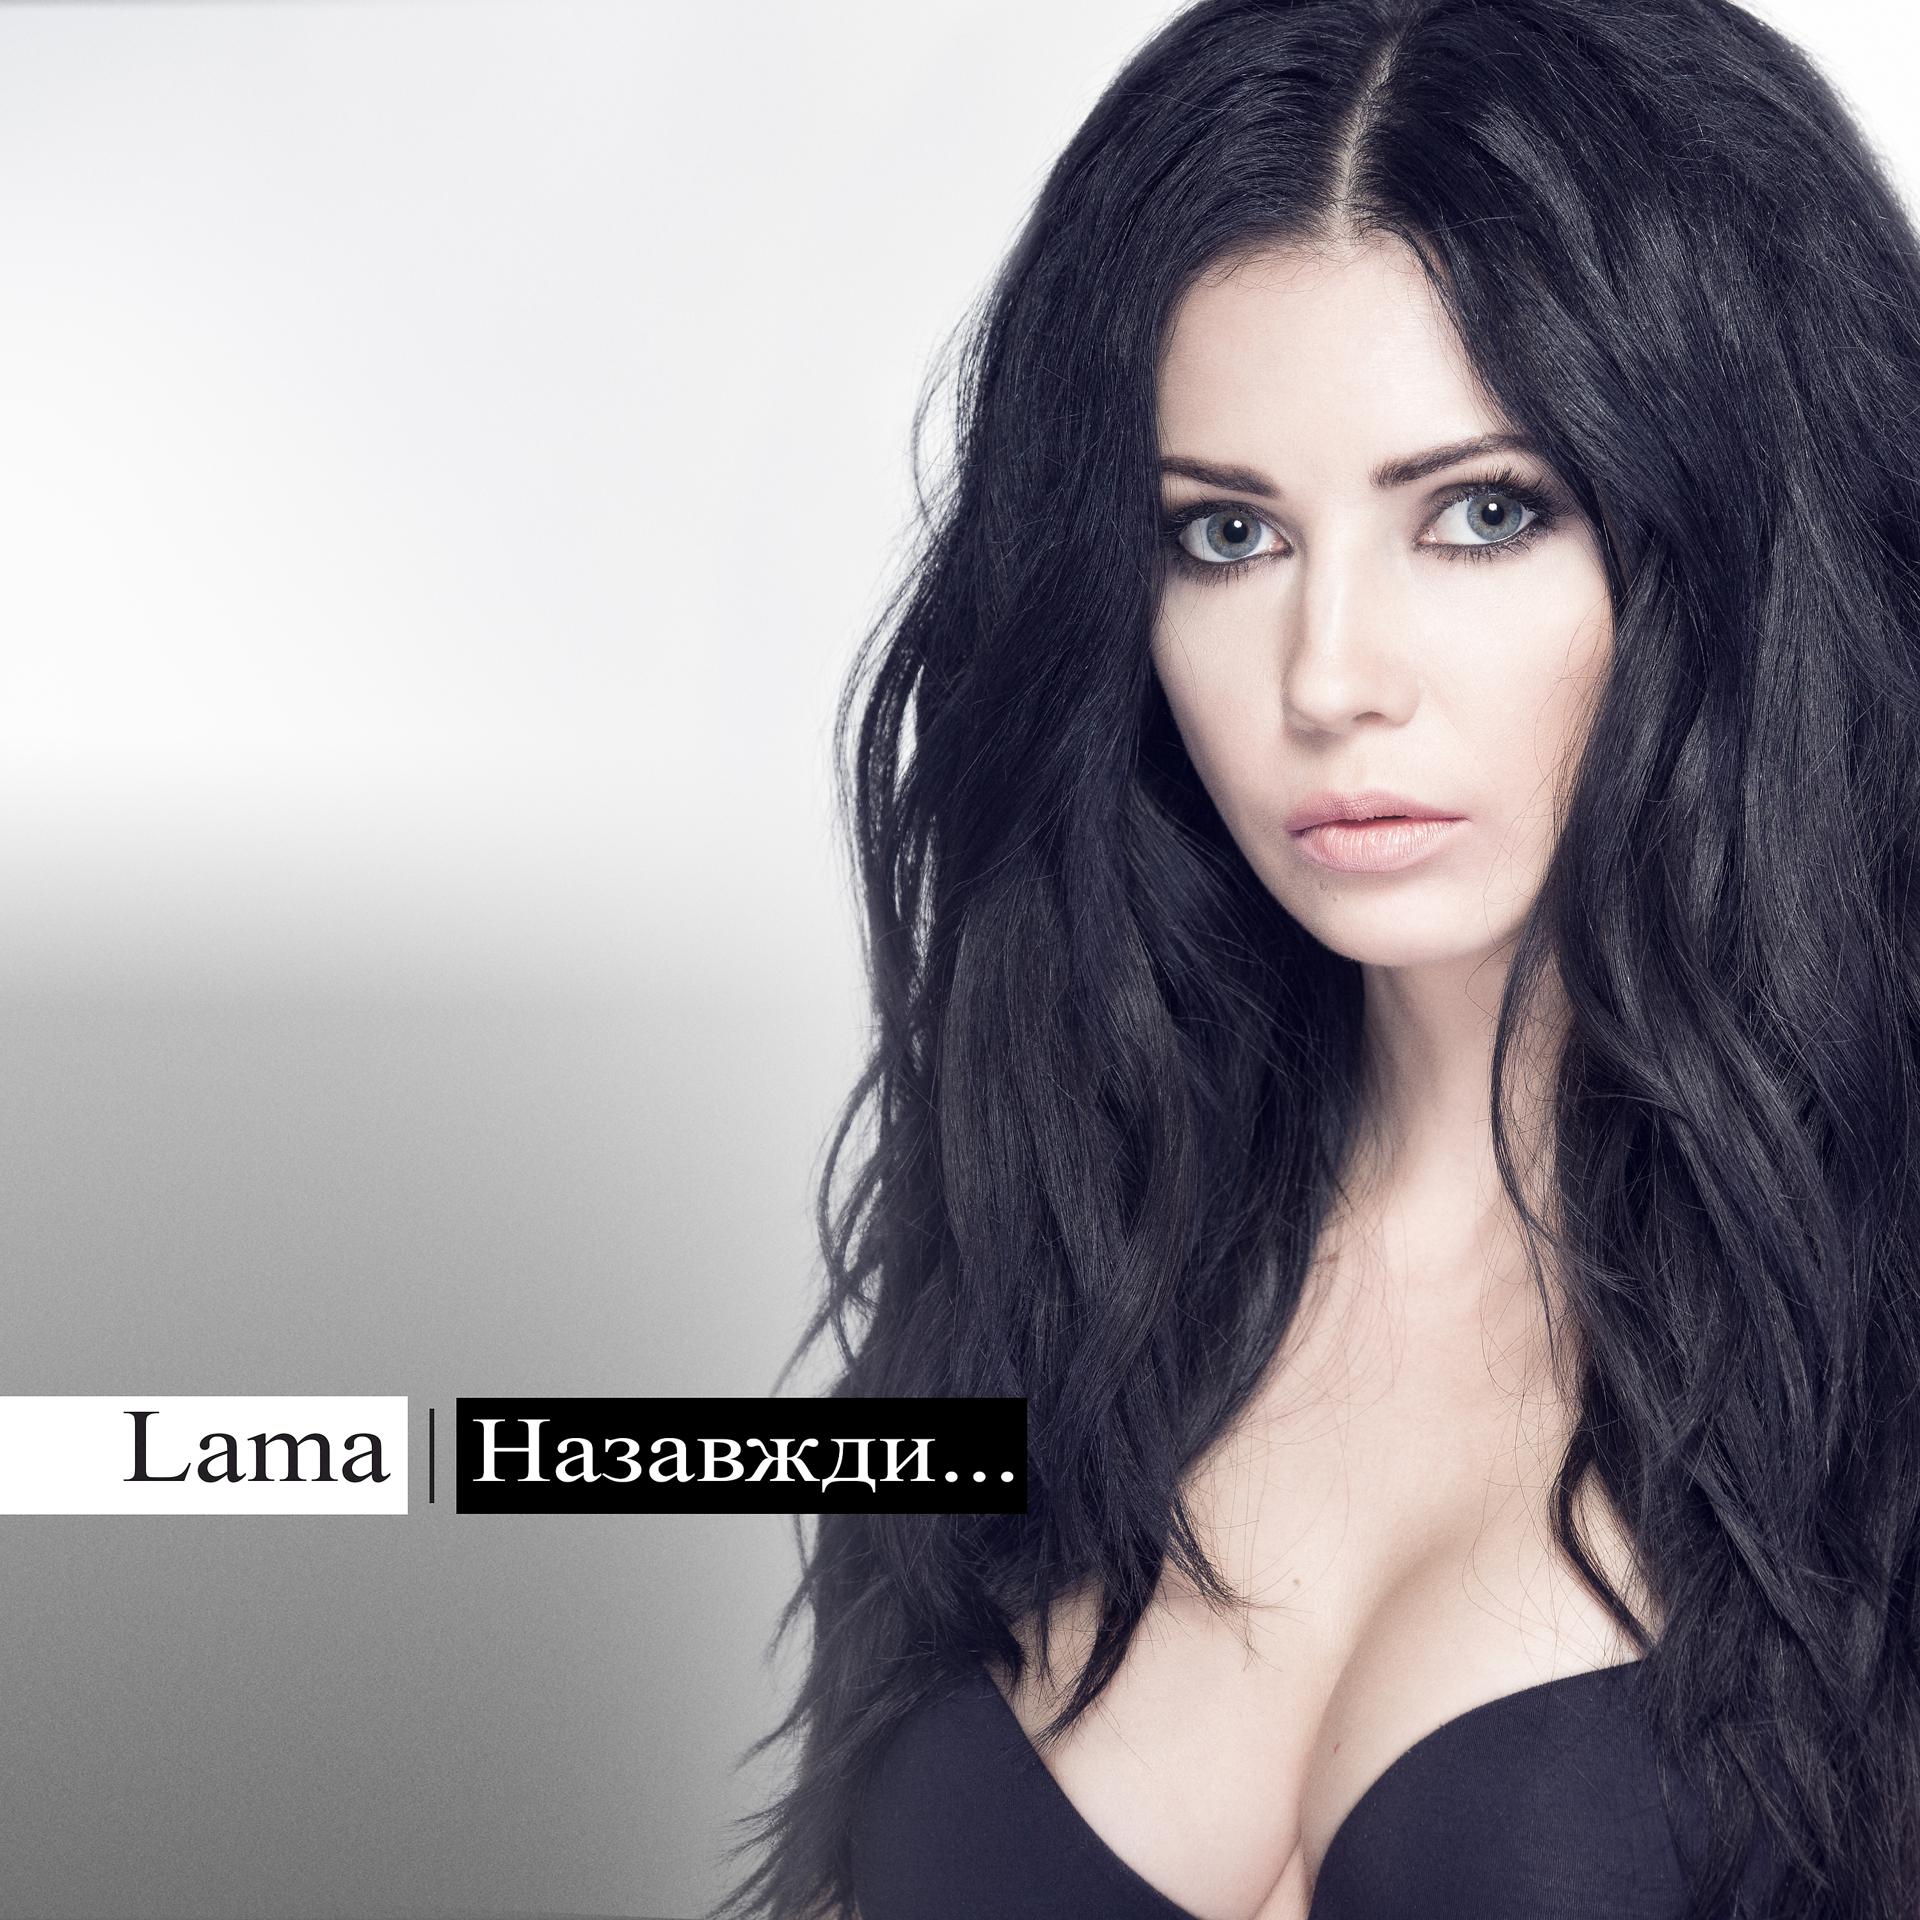 Песня лама мама а4 слушать. Lama украинская певица. Певица лама фото.